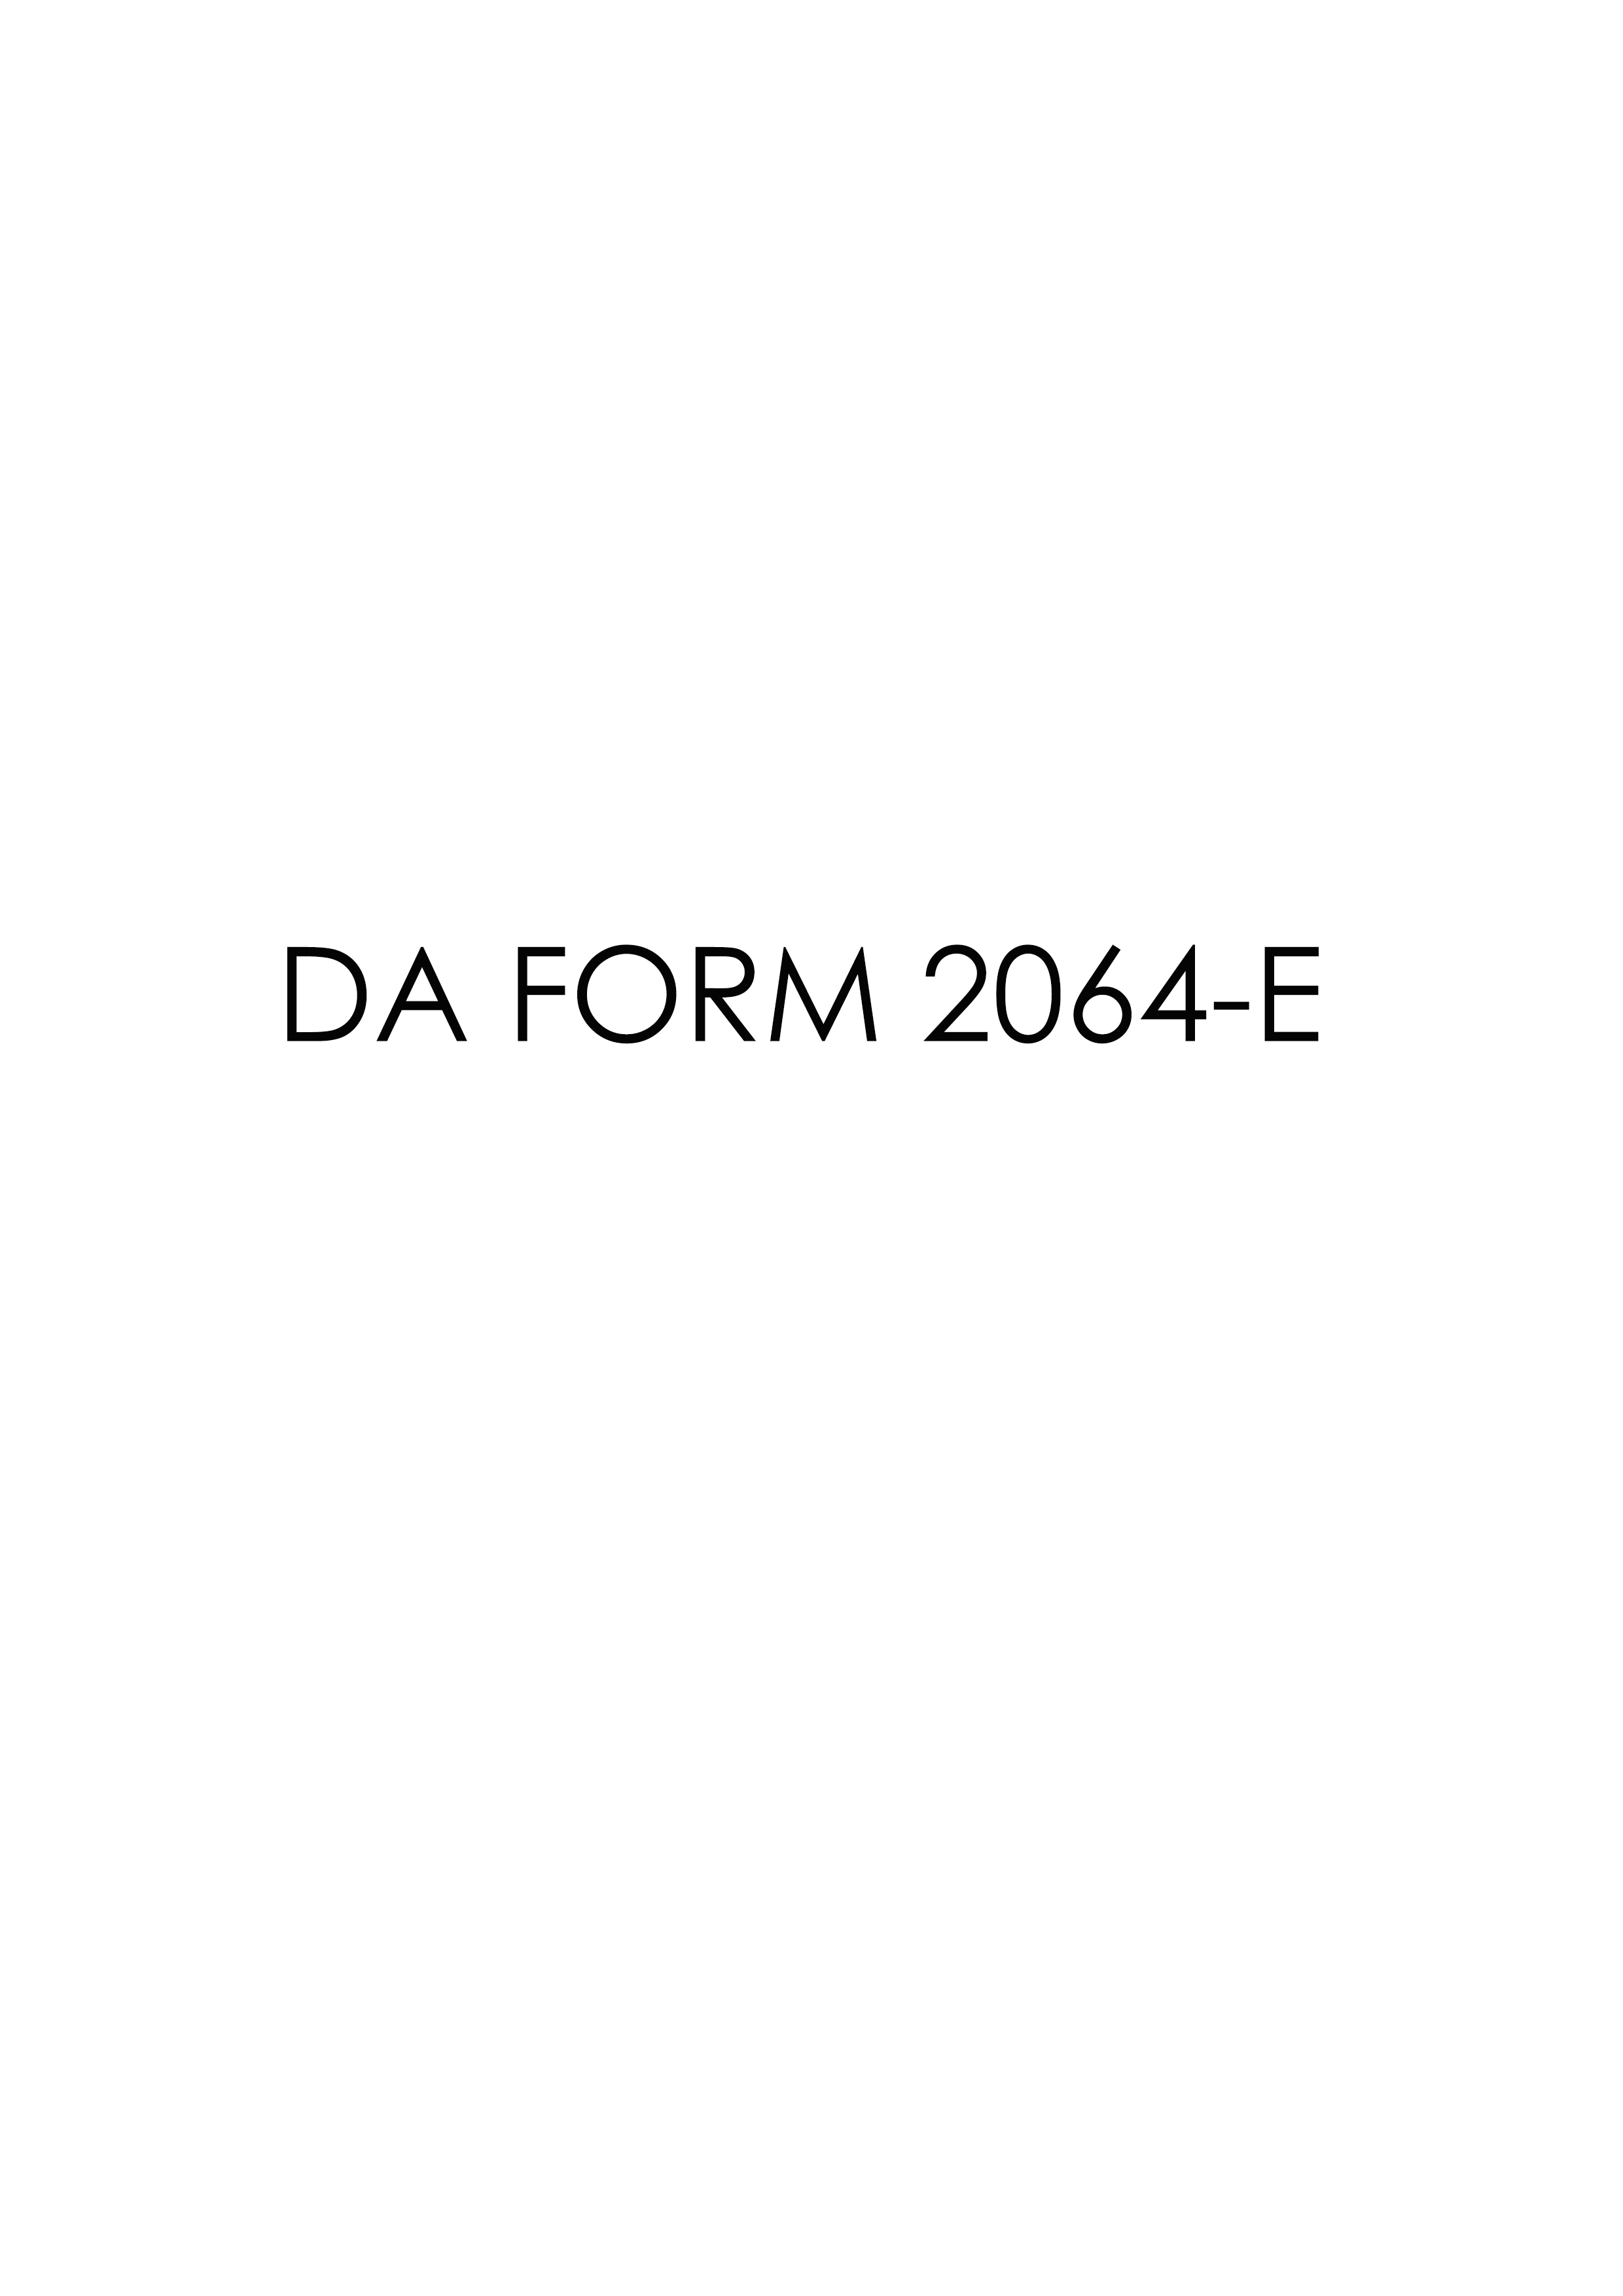 da Form 2064-E fillable